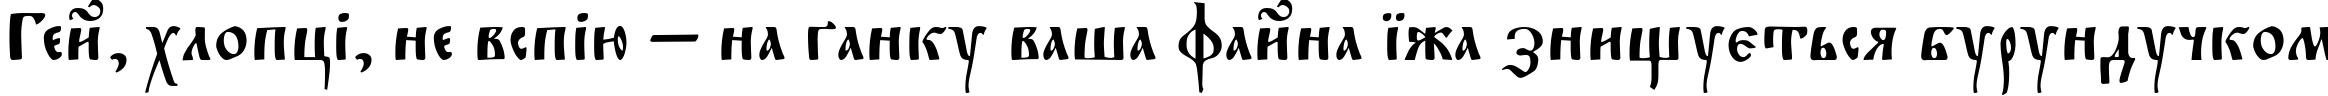 Пример написания шрифтом Fita_Poluustav текста на украинском